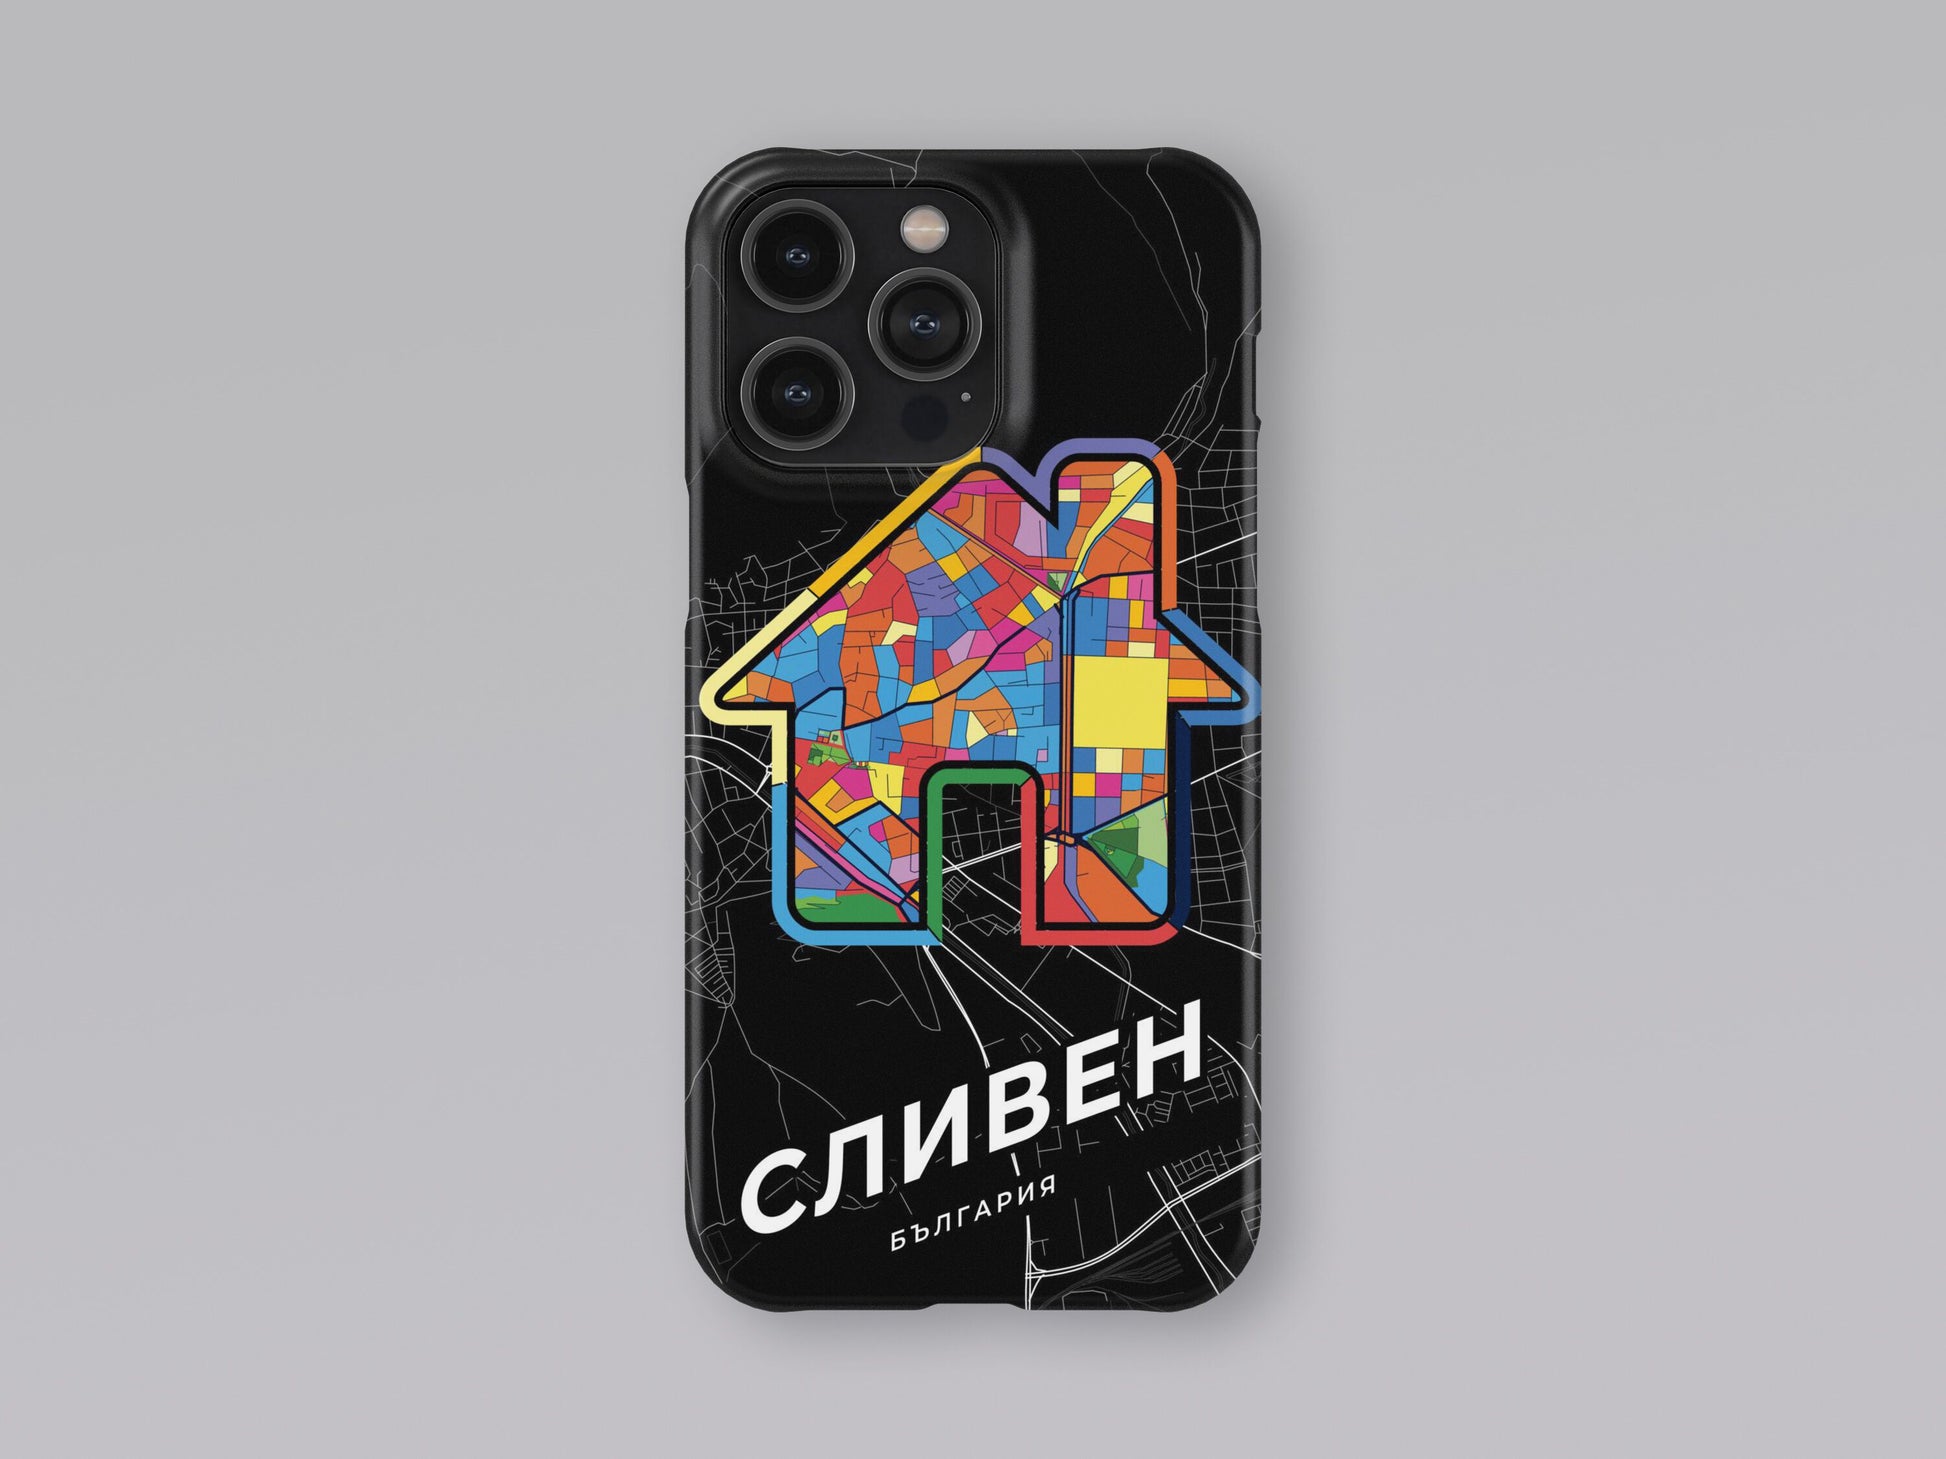 Сливен България slim phone case with colorful icon 3